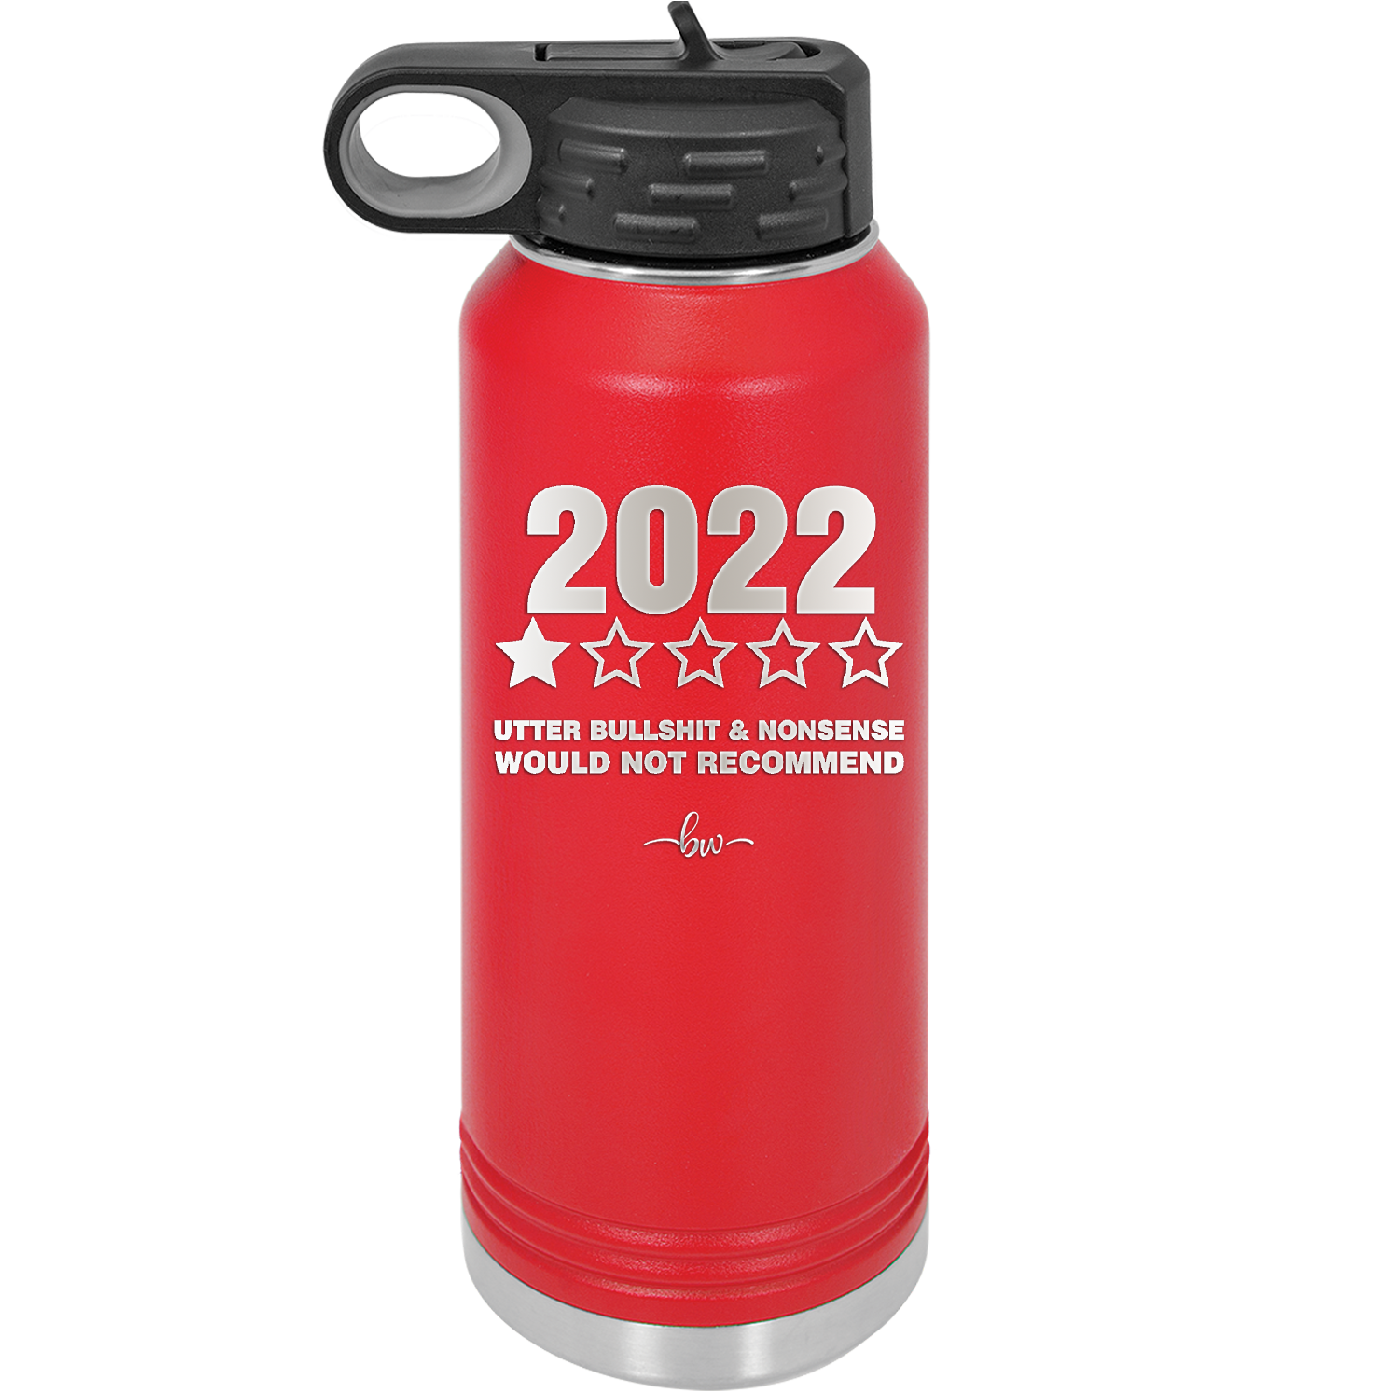 32 oz water bottle  2022 utter bullshitt and nonsense would not recommend-- red